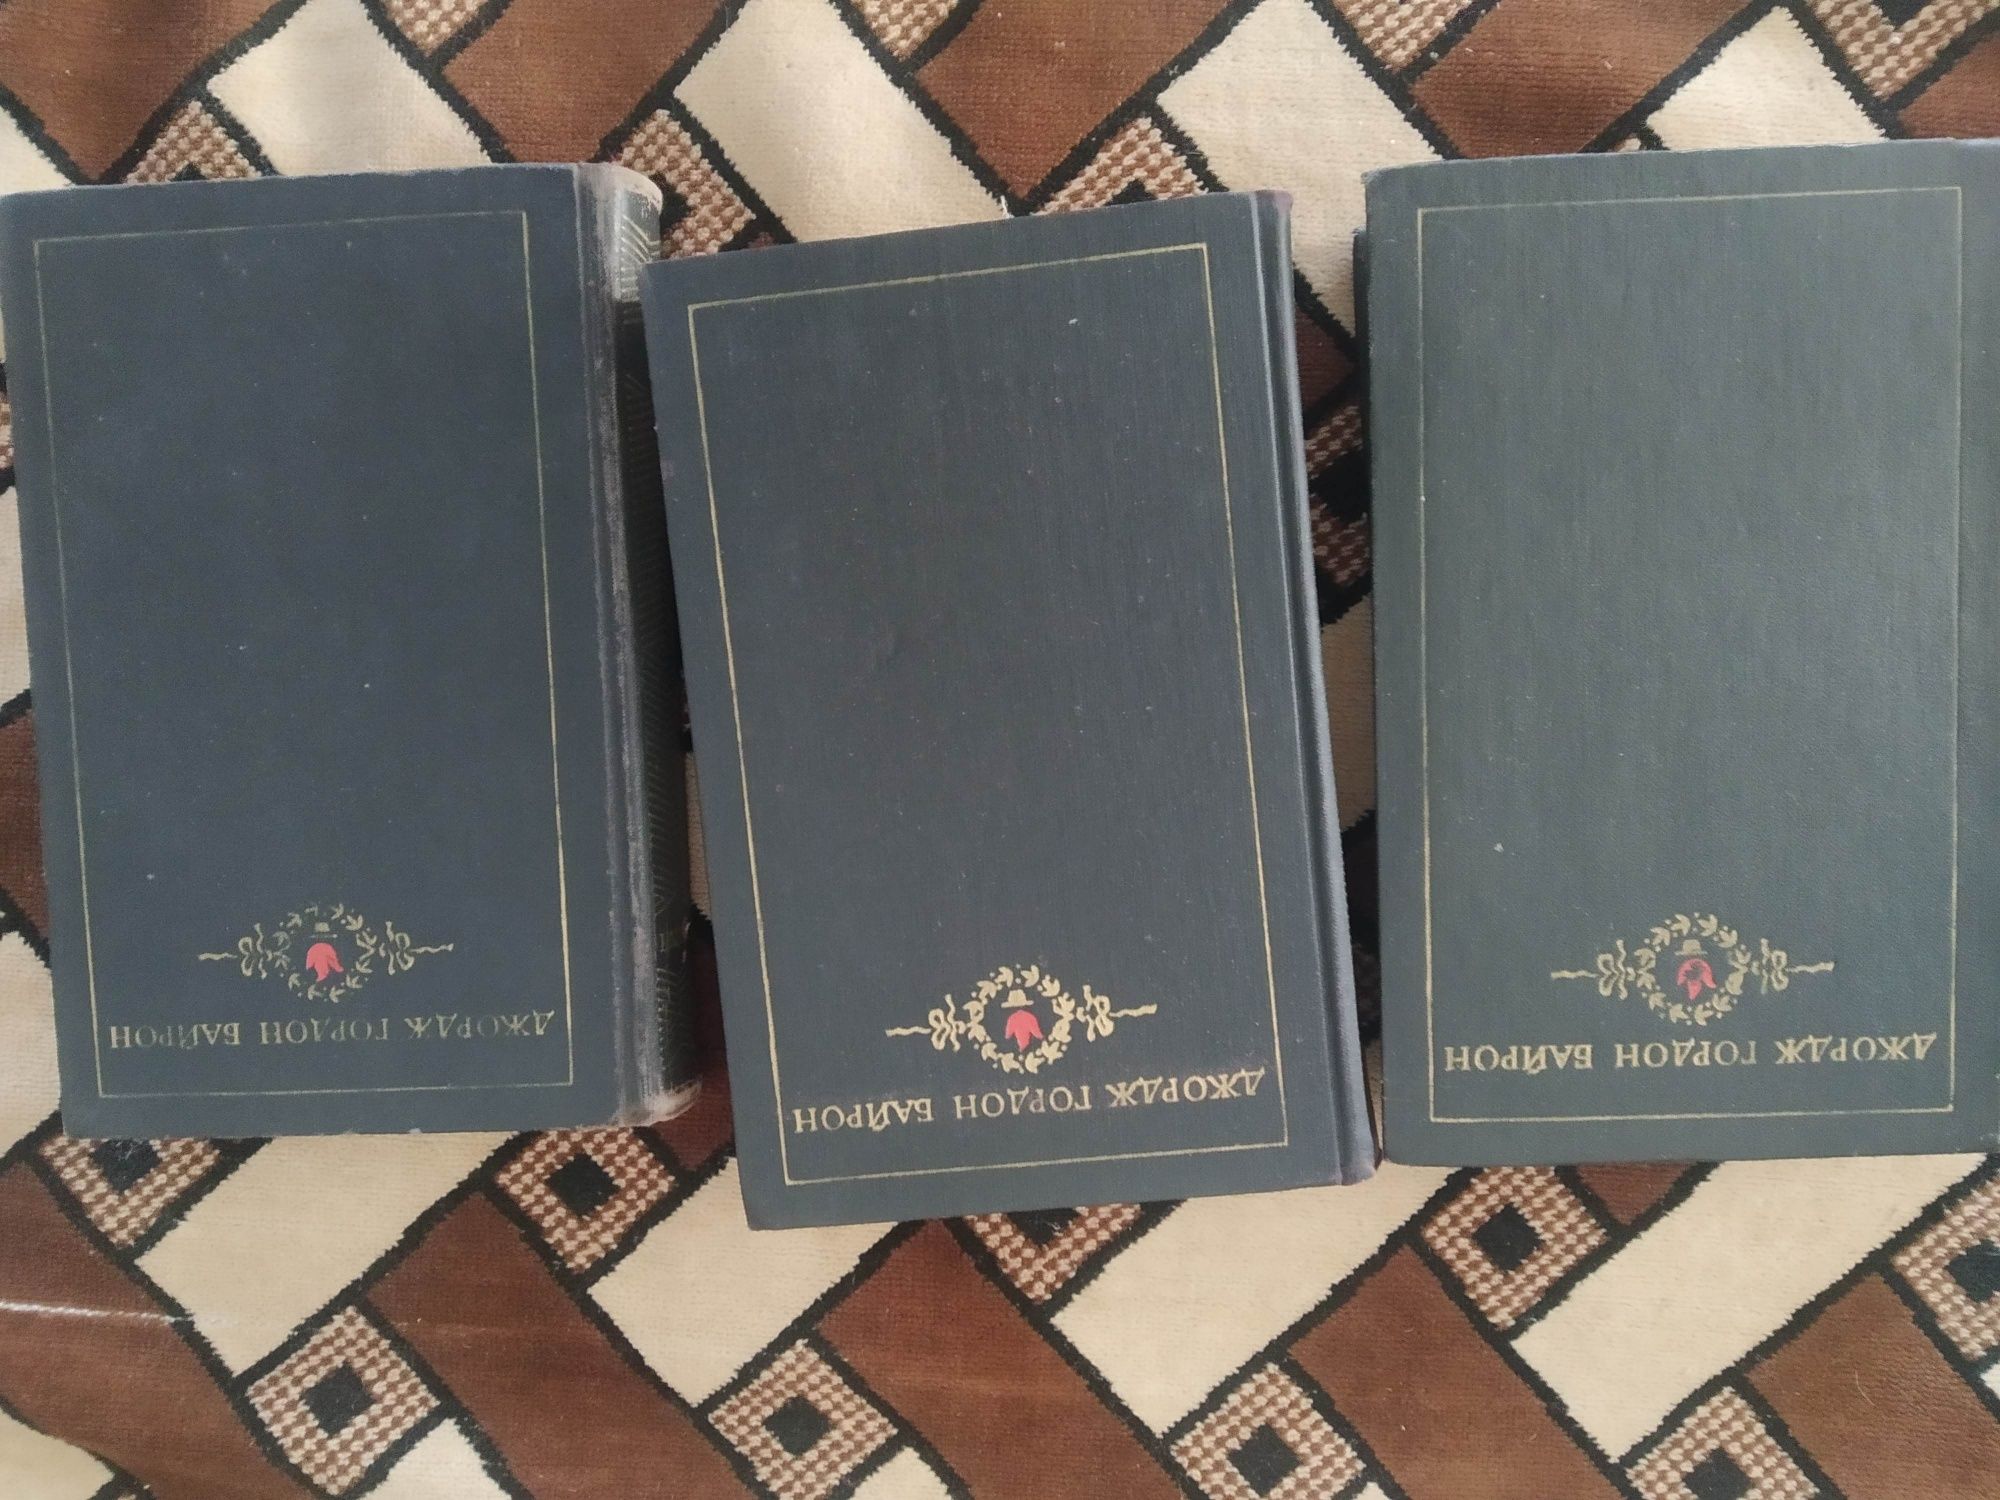 Джордж Гордон Байрон в 3х томах

Состояние: Хорошее
Год: 1974
Тираж: 1